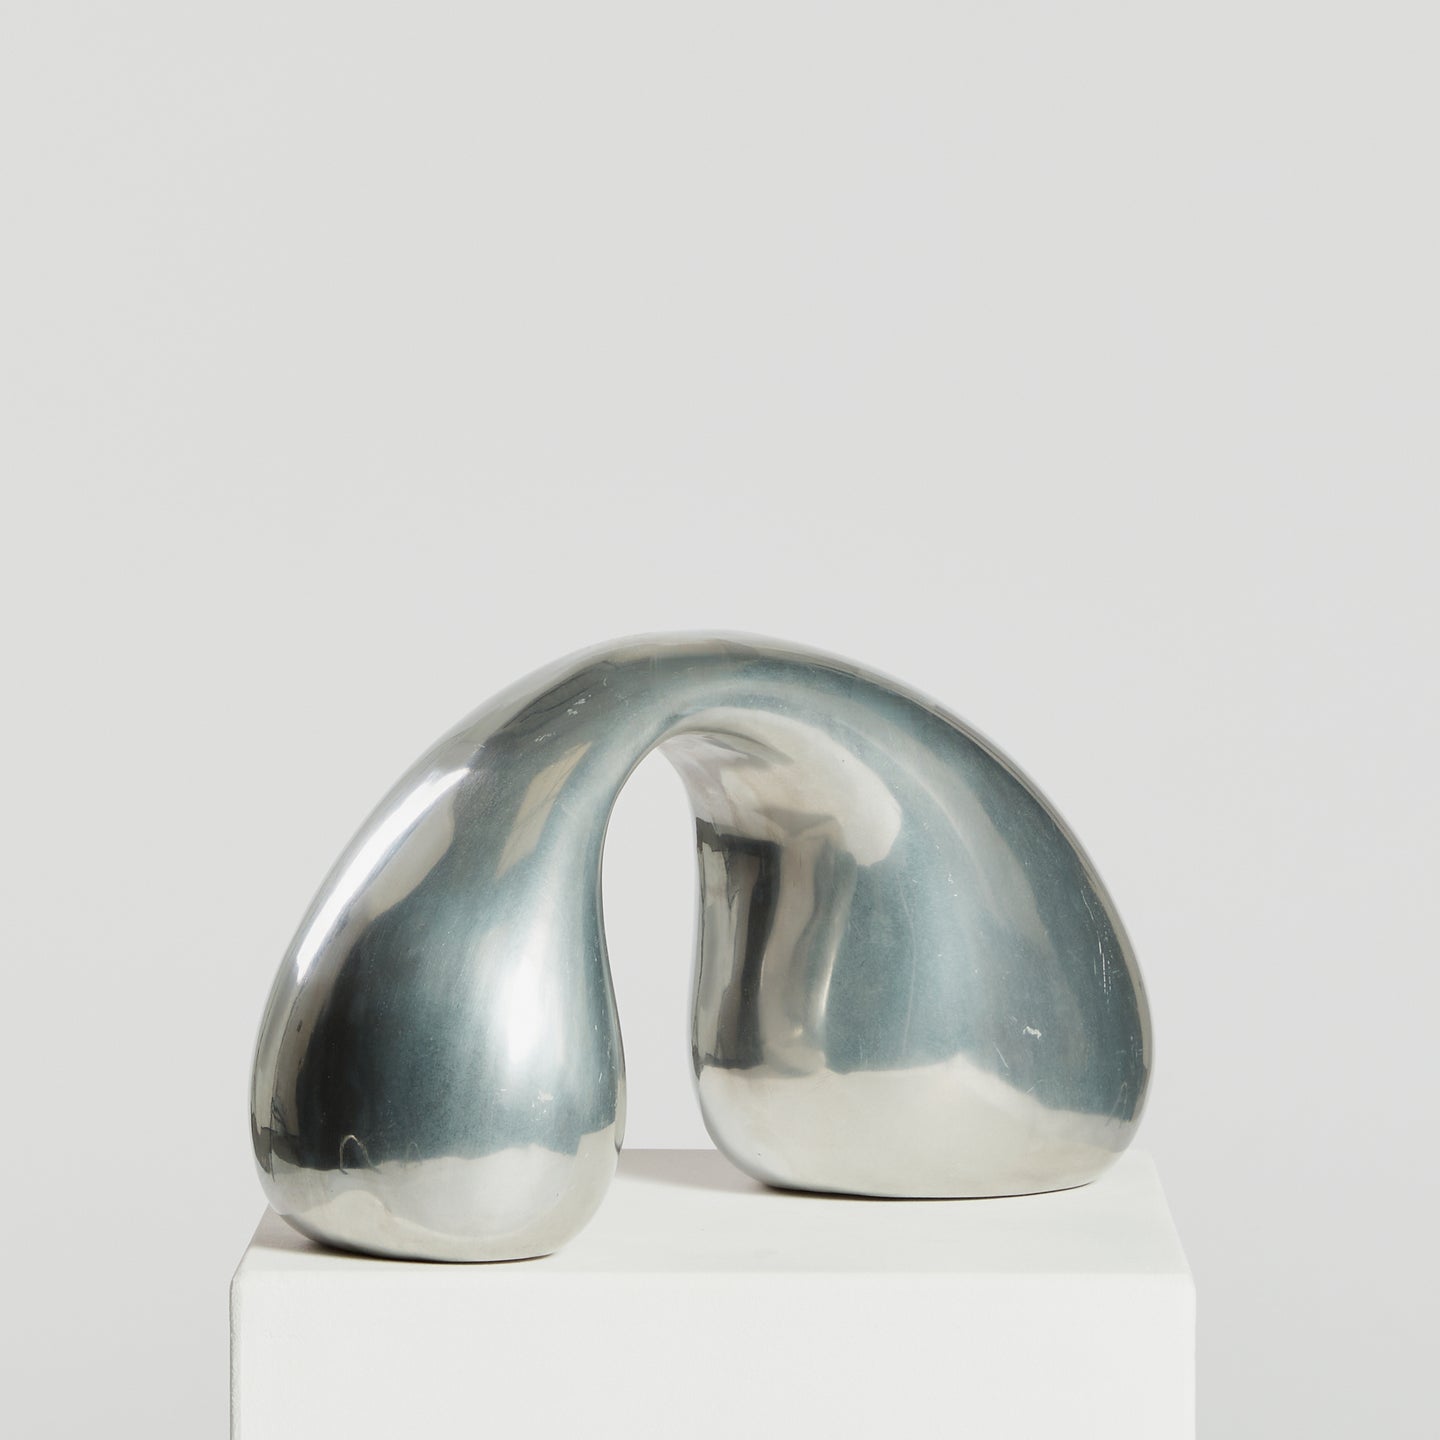 Postmodern aluminium biomorphic sculpture by Eva Moritz